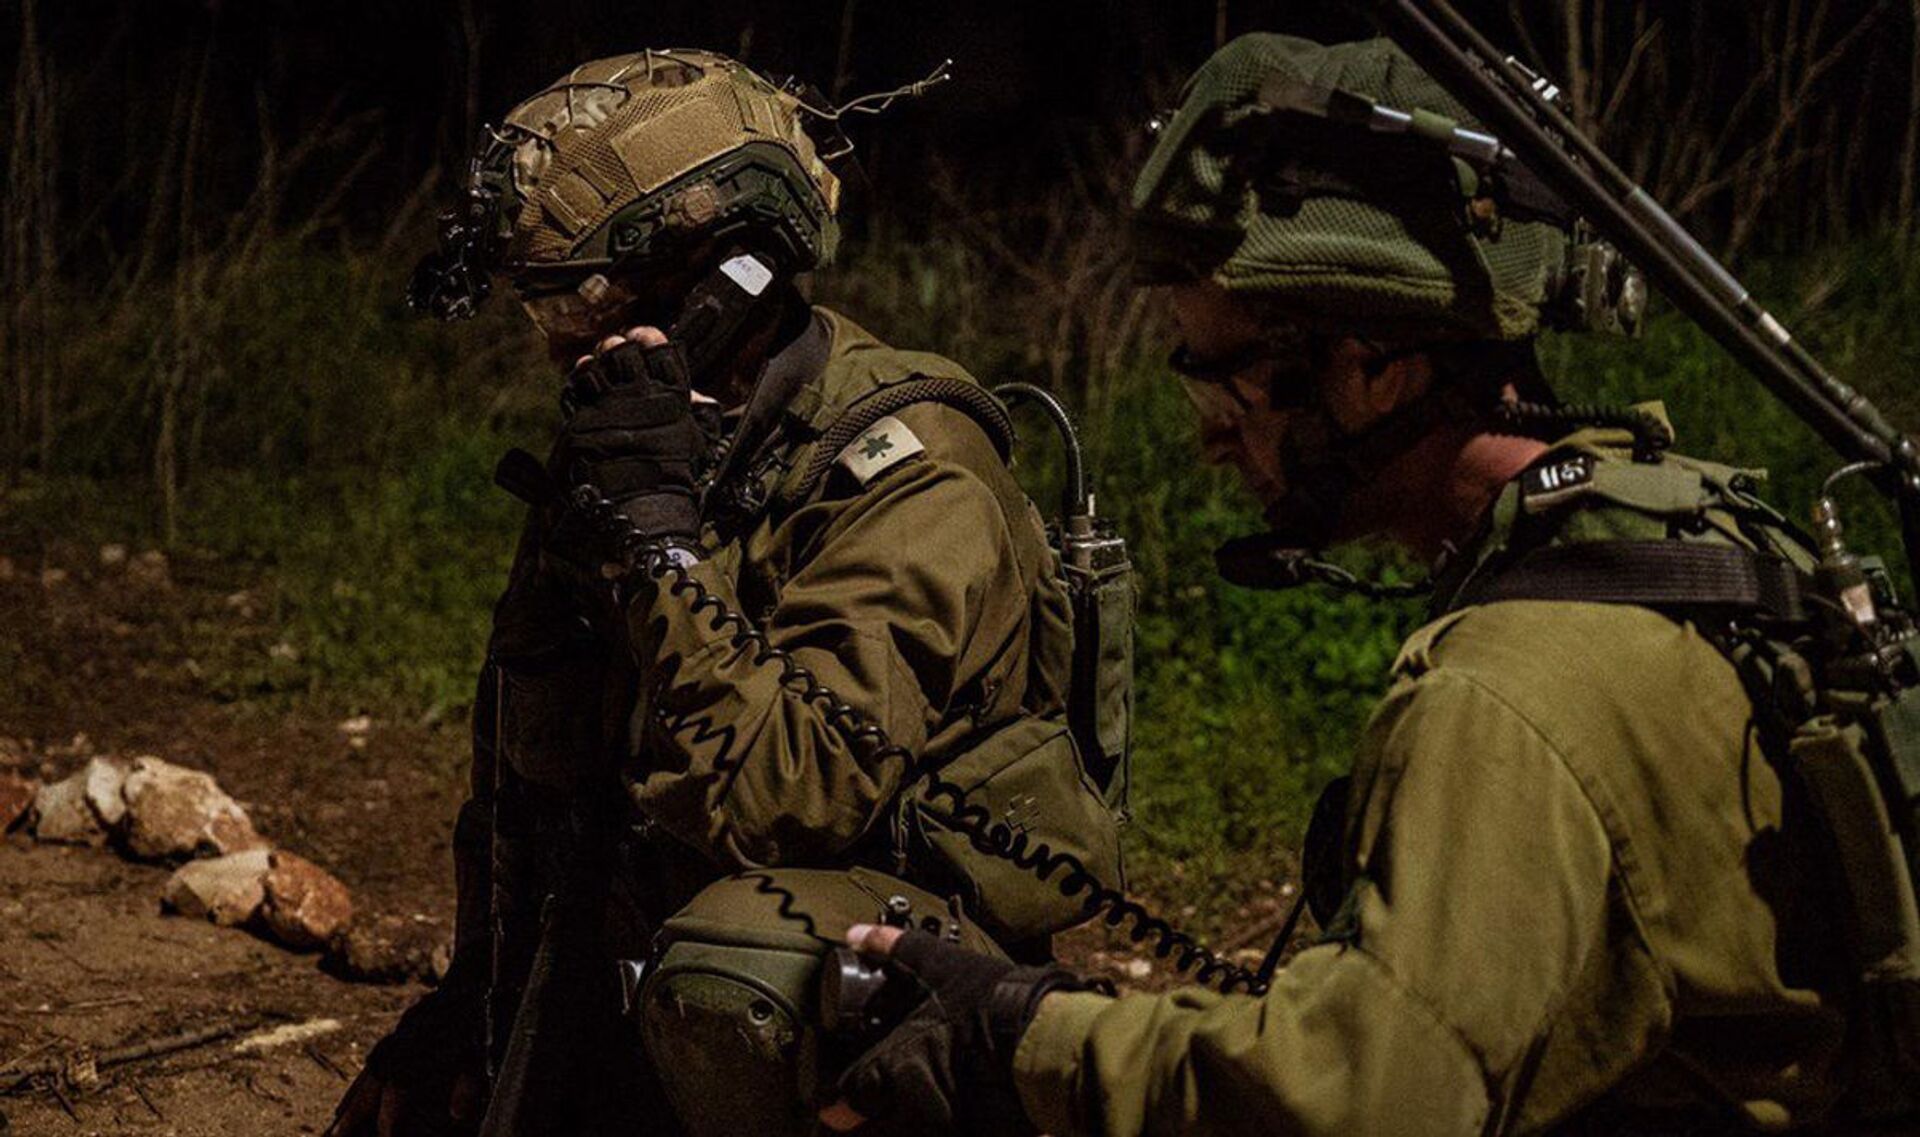 Israel realiza treinamento militar na fronteira com o Líbano para combater Hezbollah (FOTOS, VÍDEO) - Sputnik Brasil, 1920, 11.02.2021